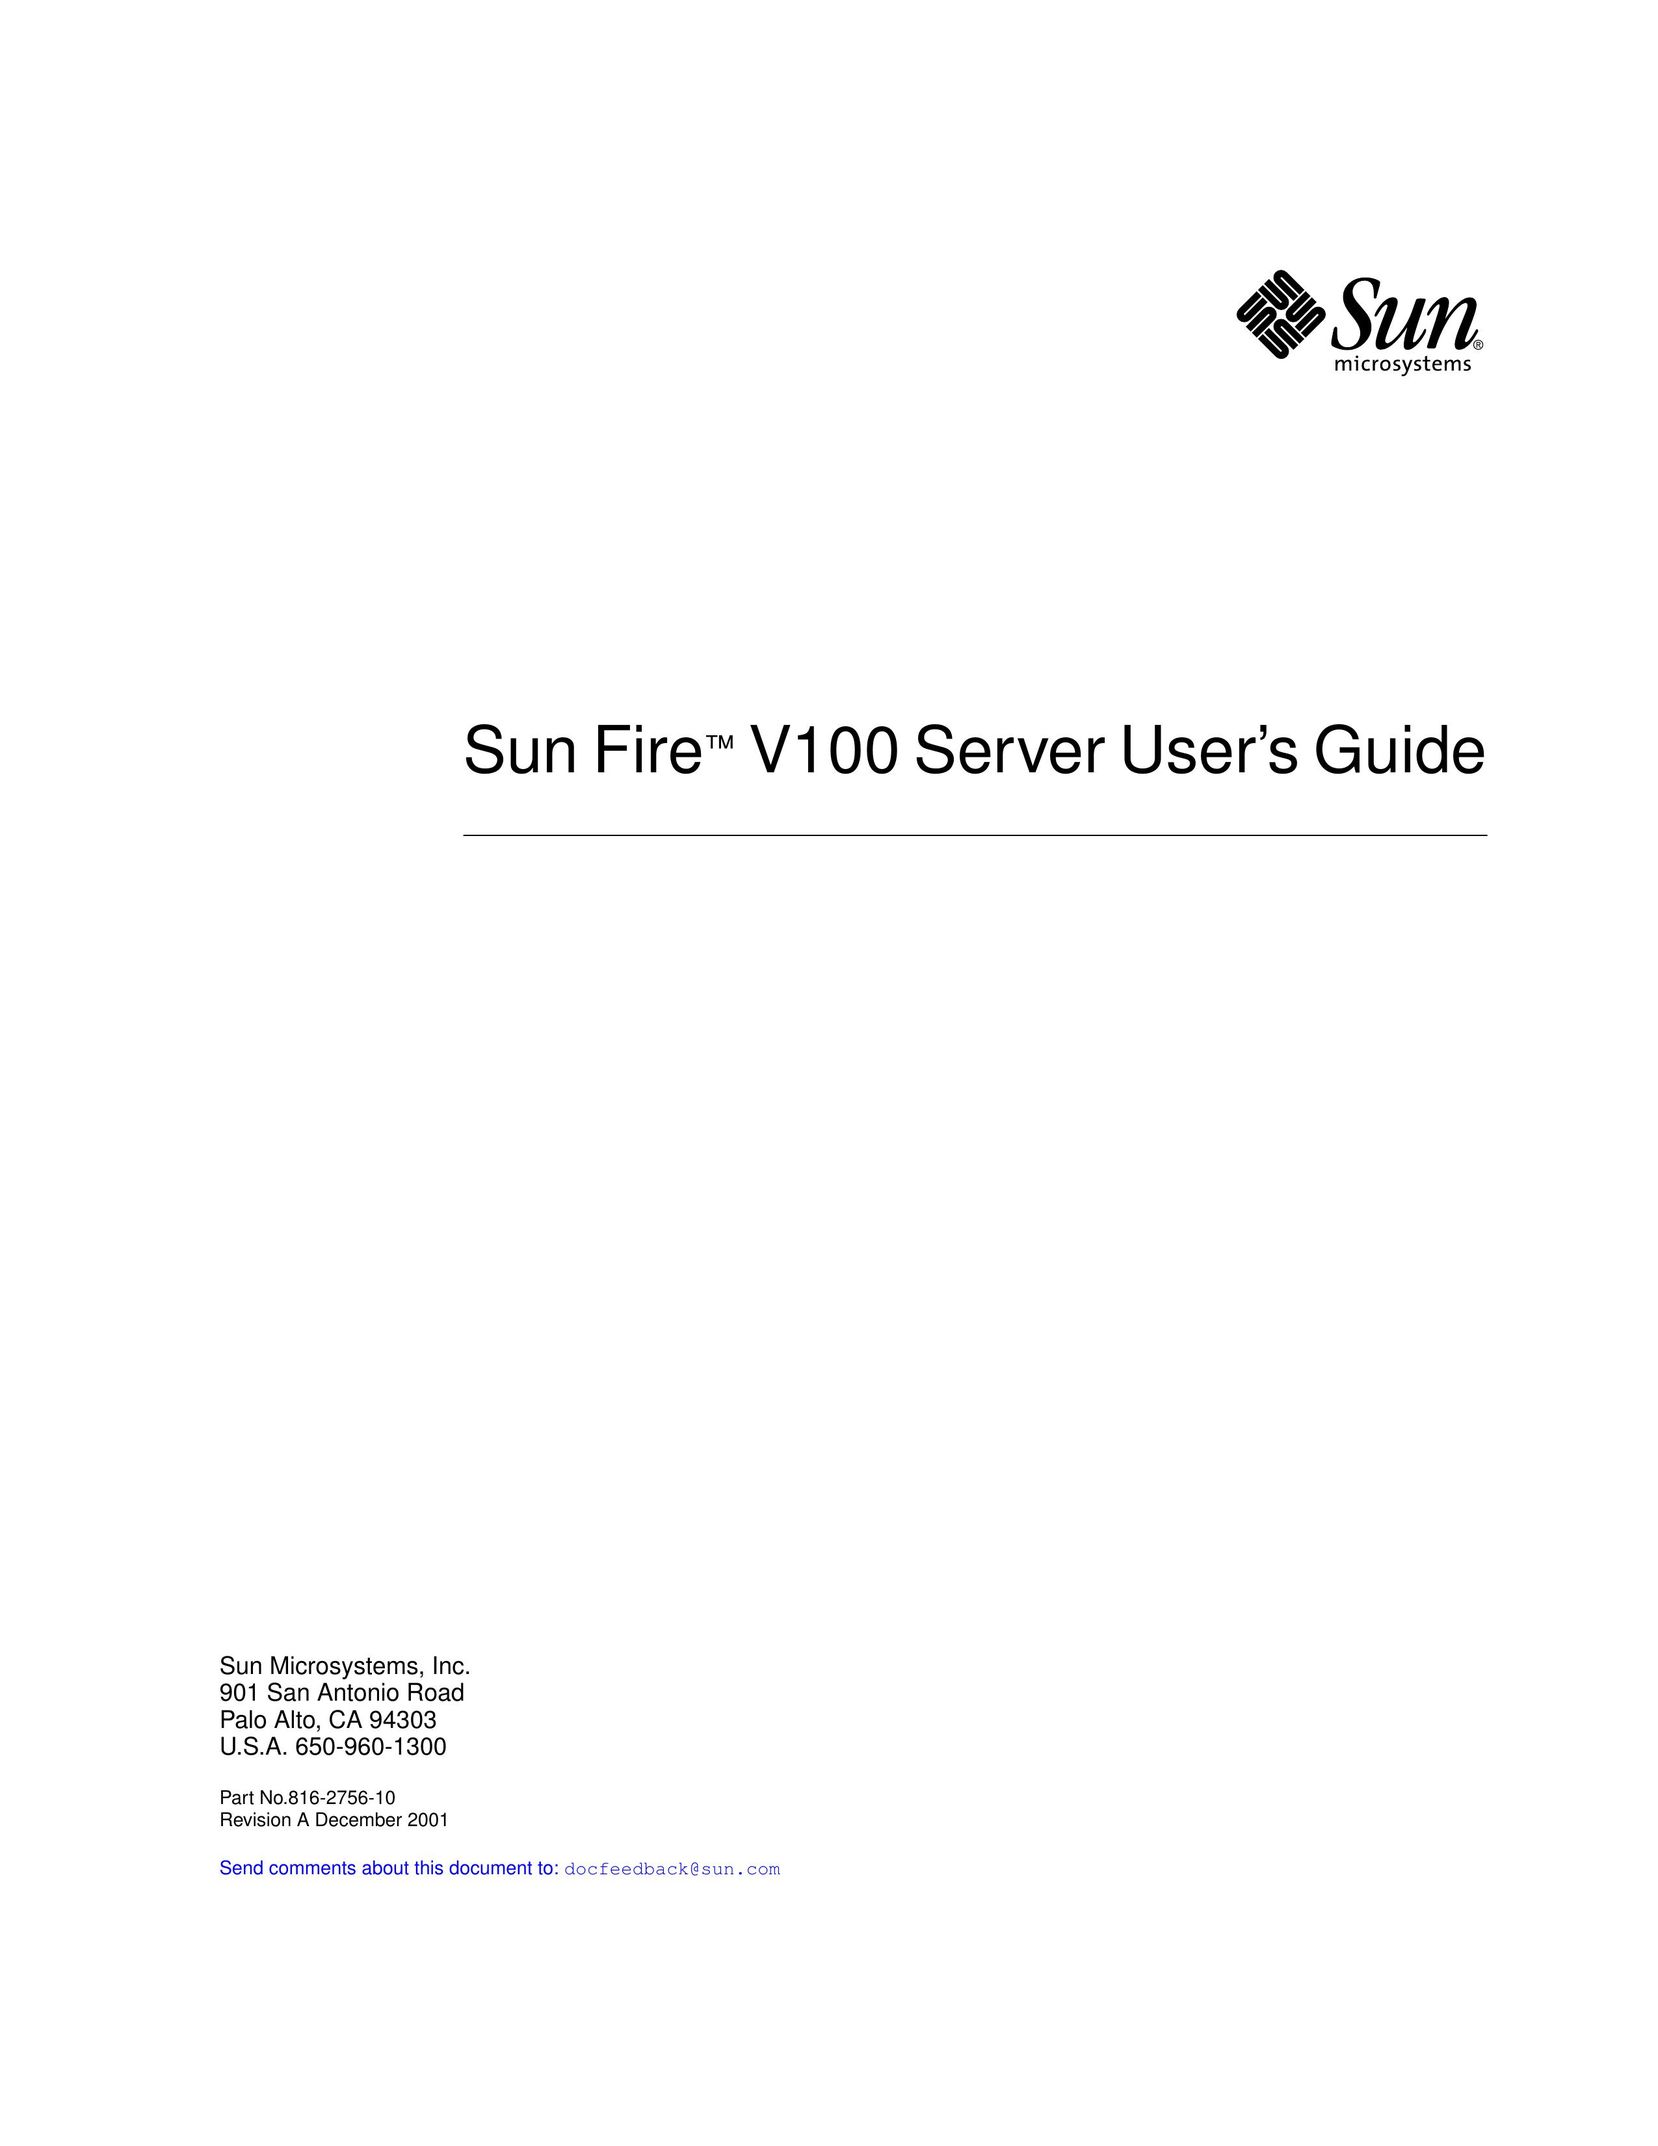 Sun Microsystems Sun Fire V100 Server User Manual